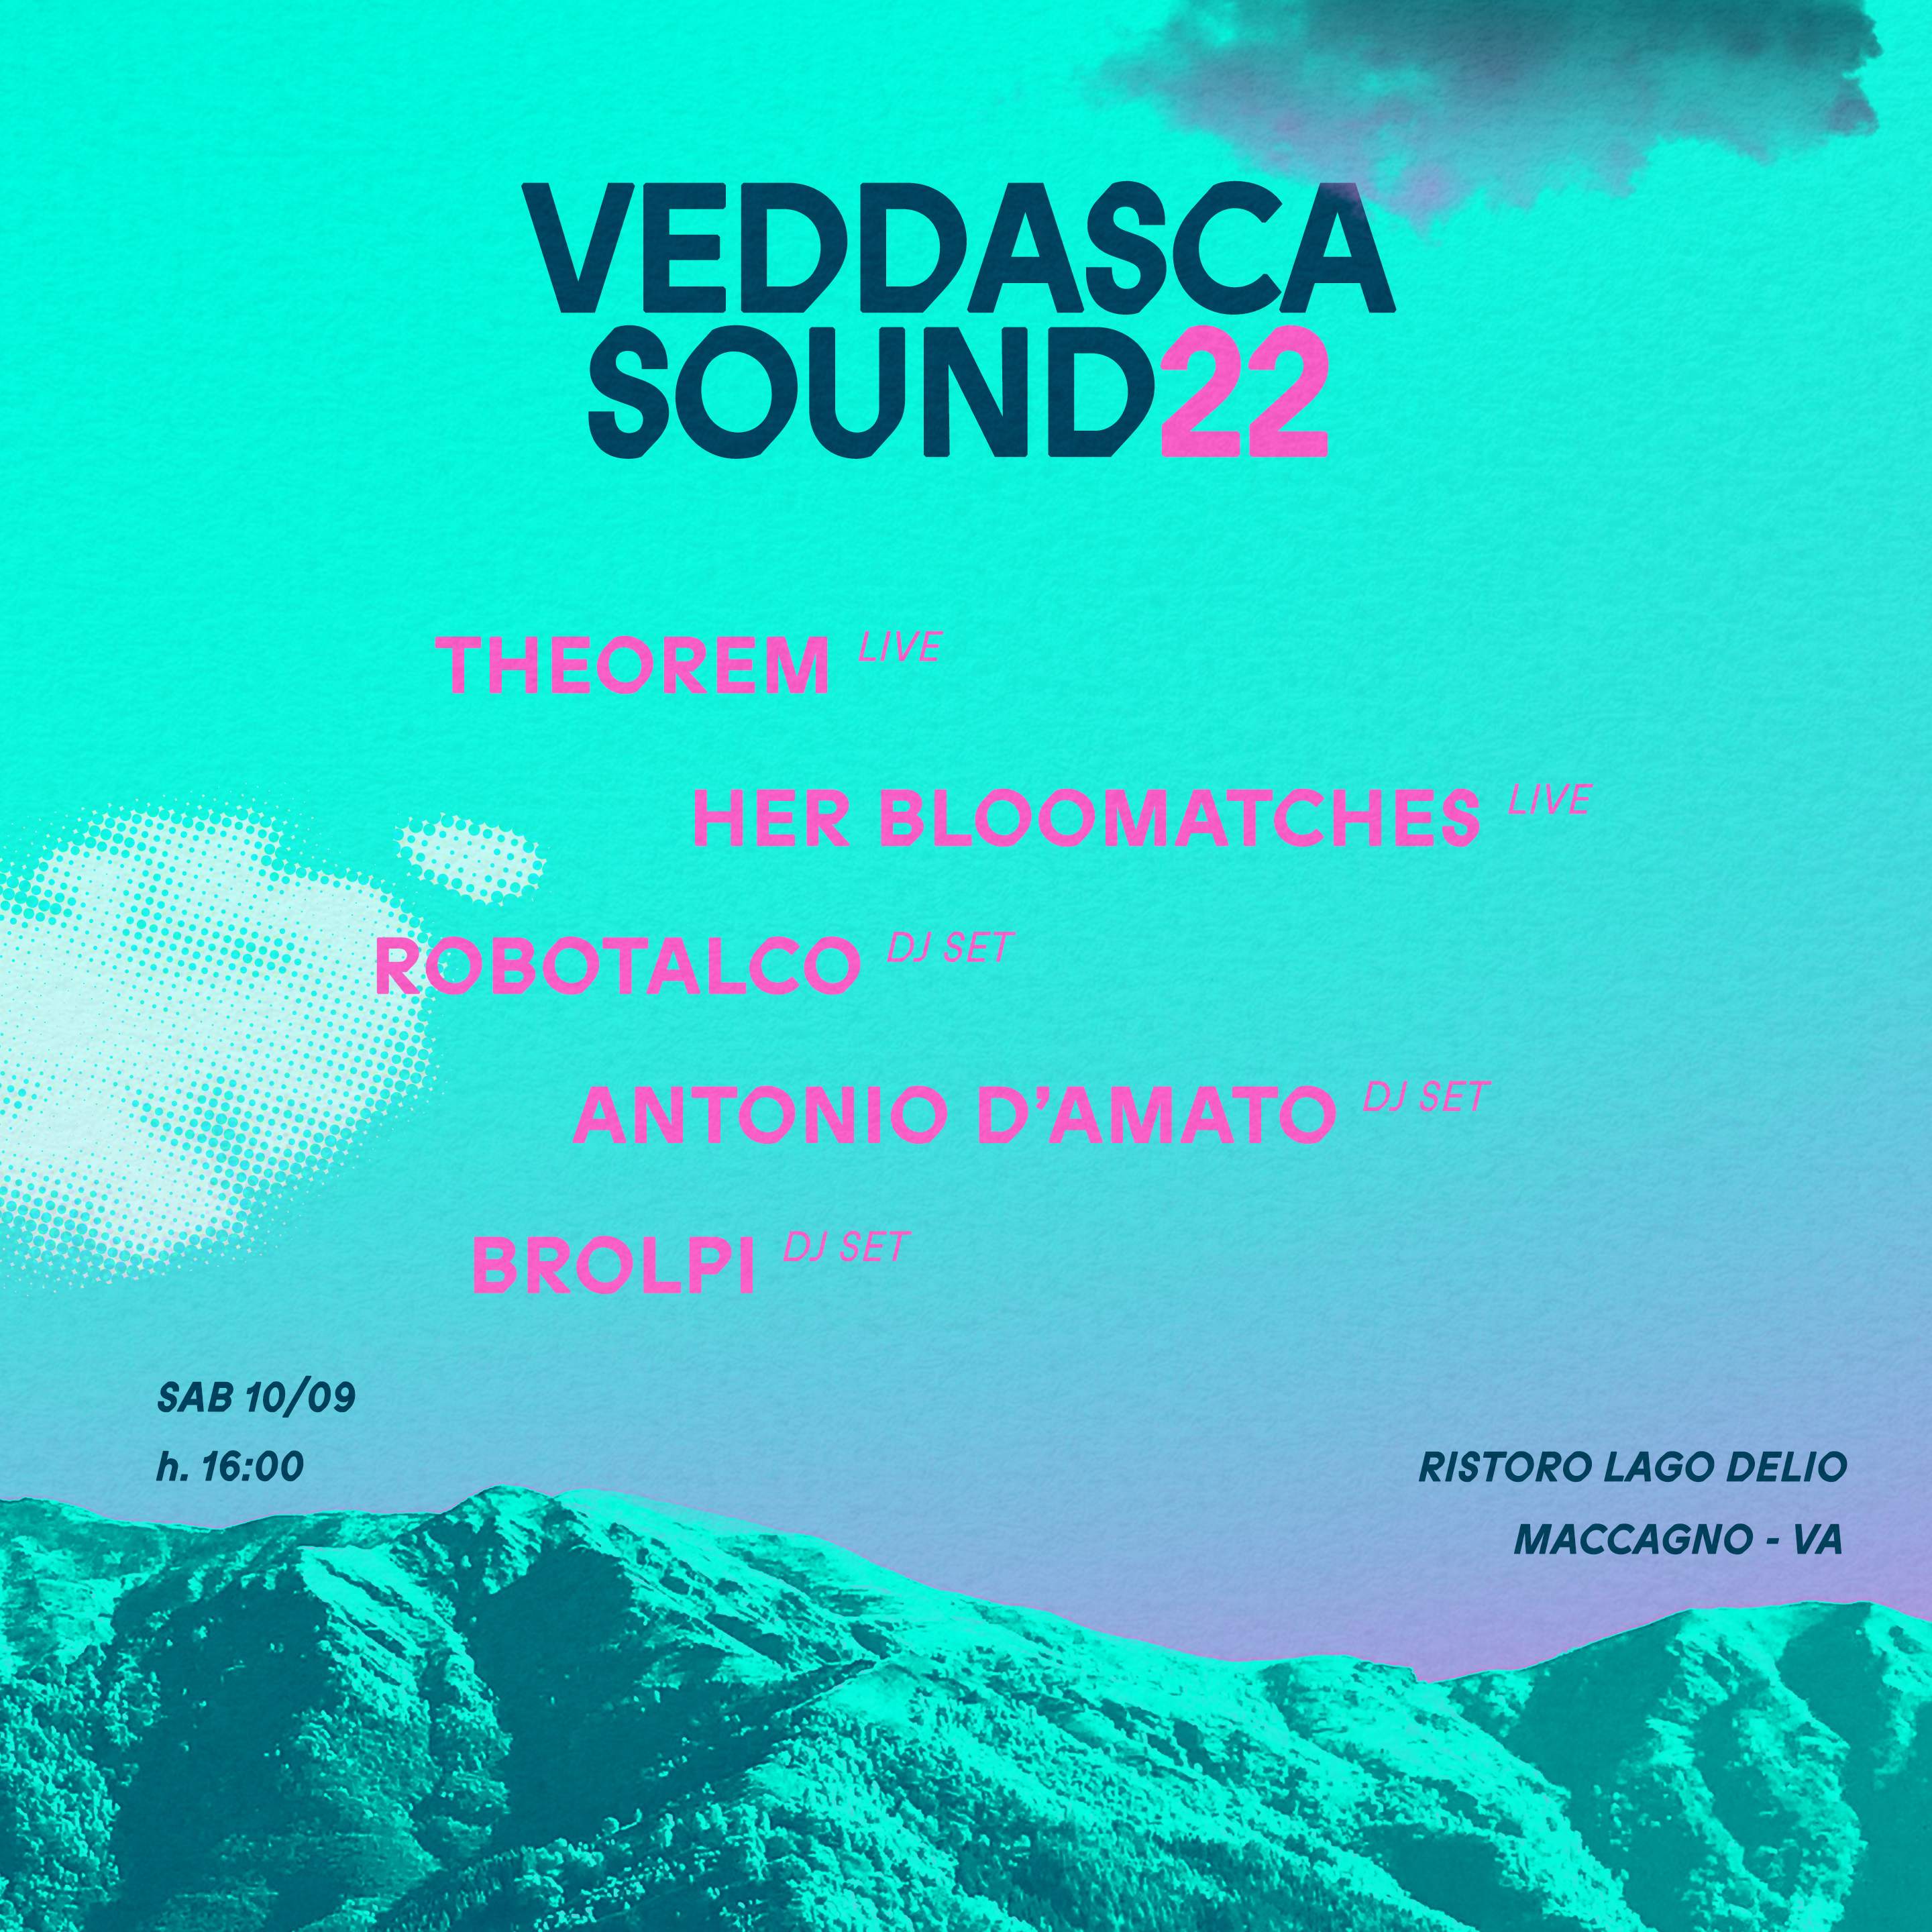 Veddasca Sound 22 - フライヤー表